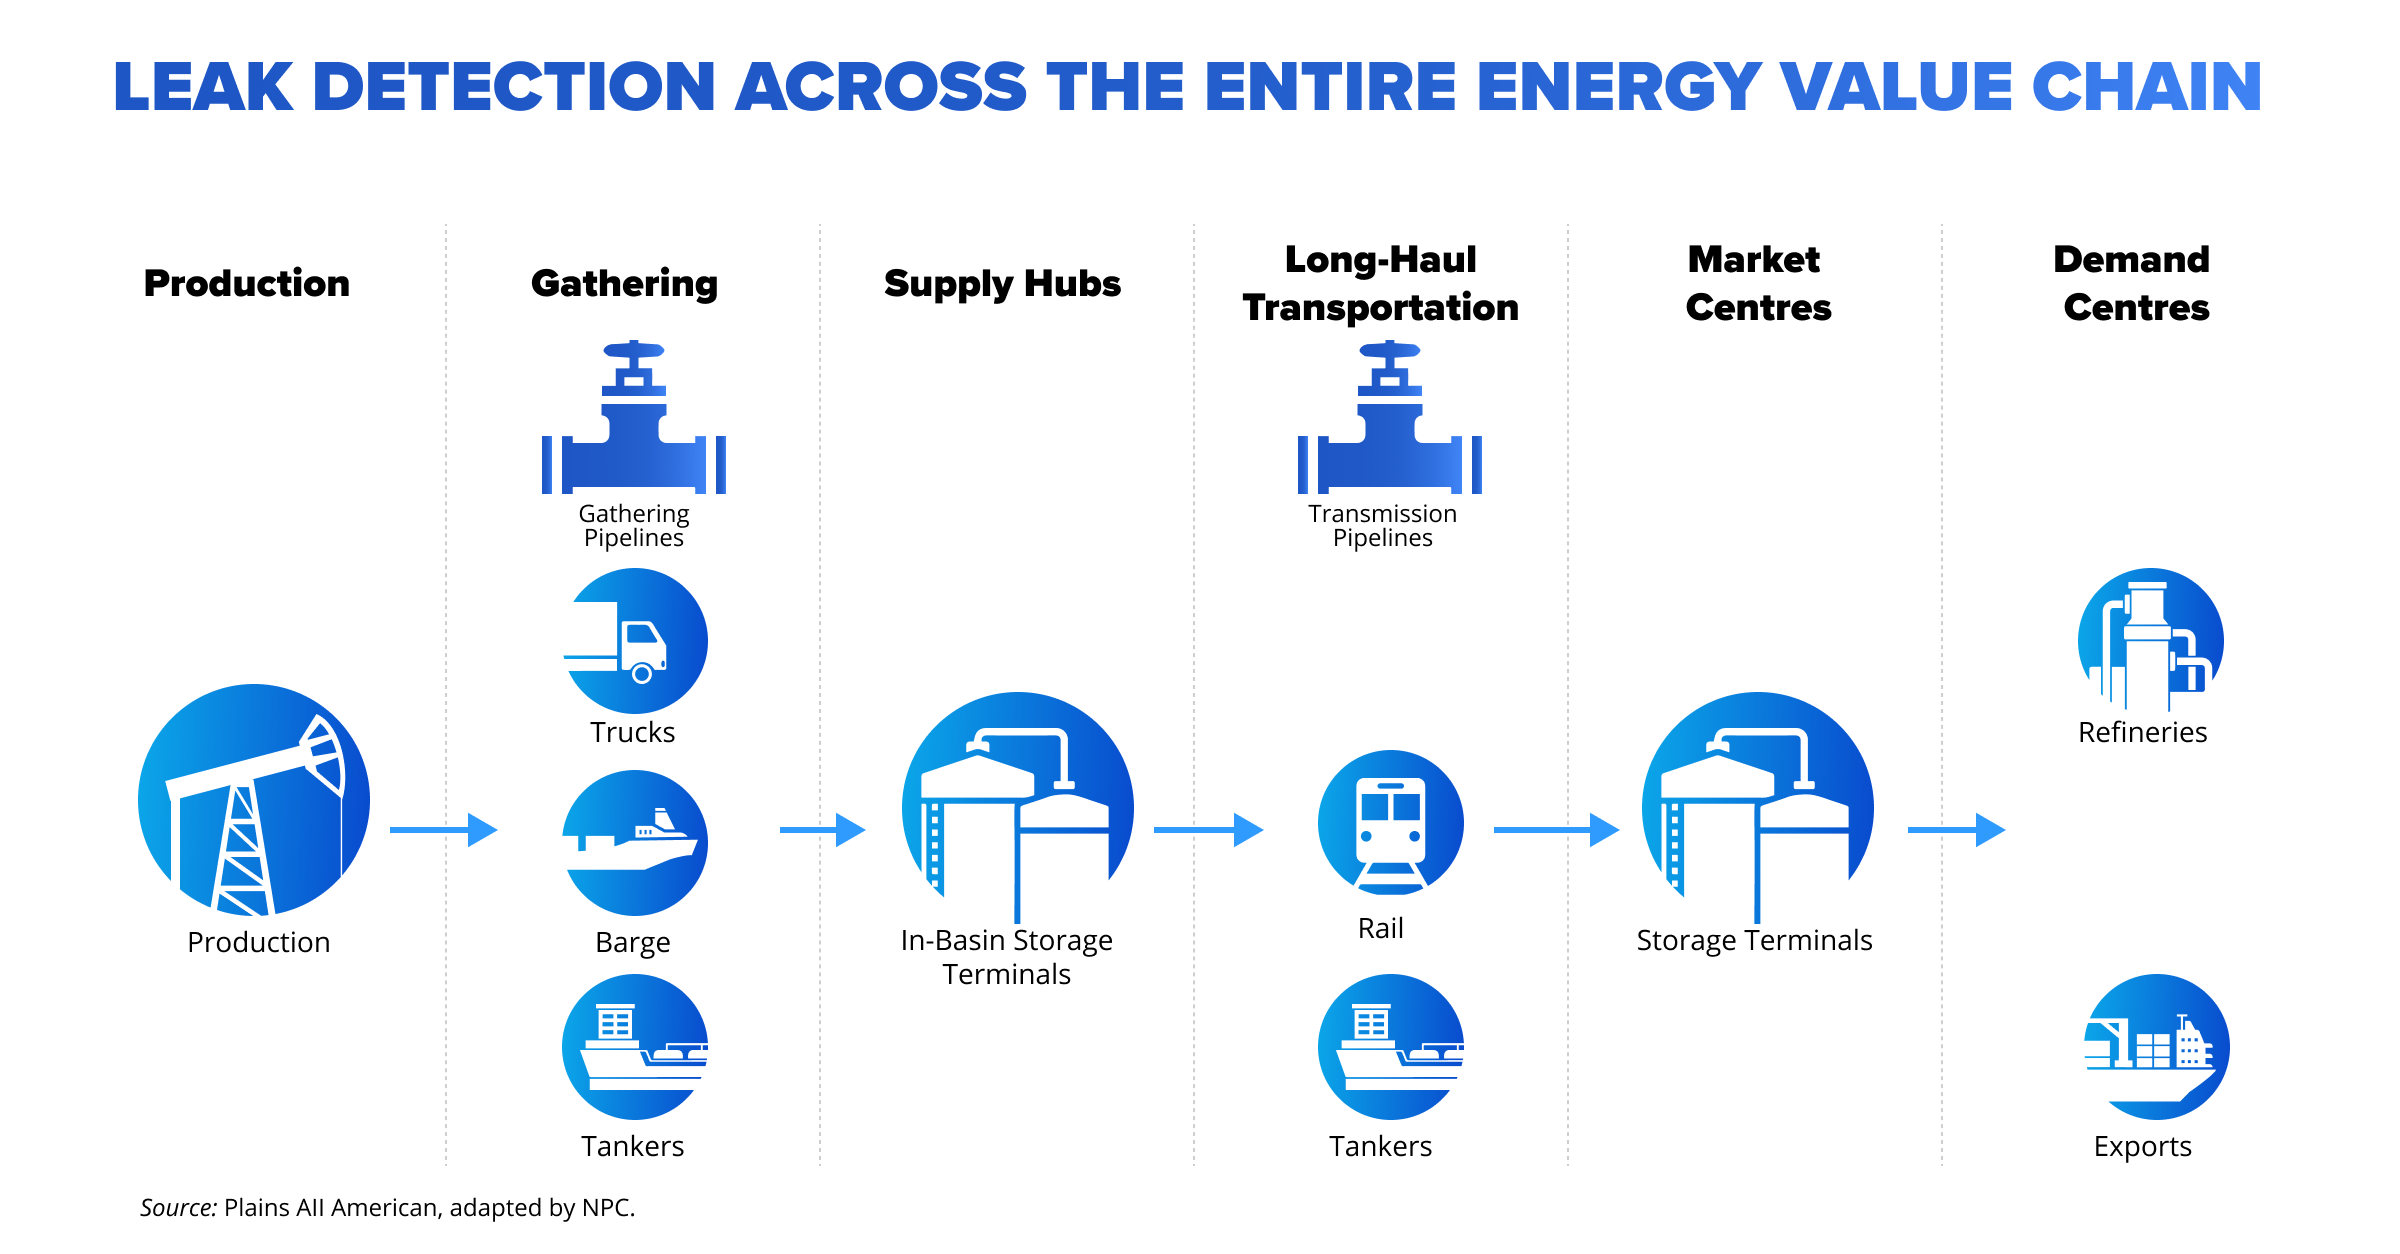 Leak detection across the entire energy value chain